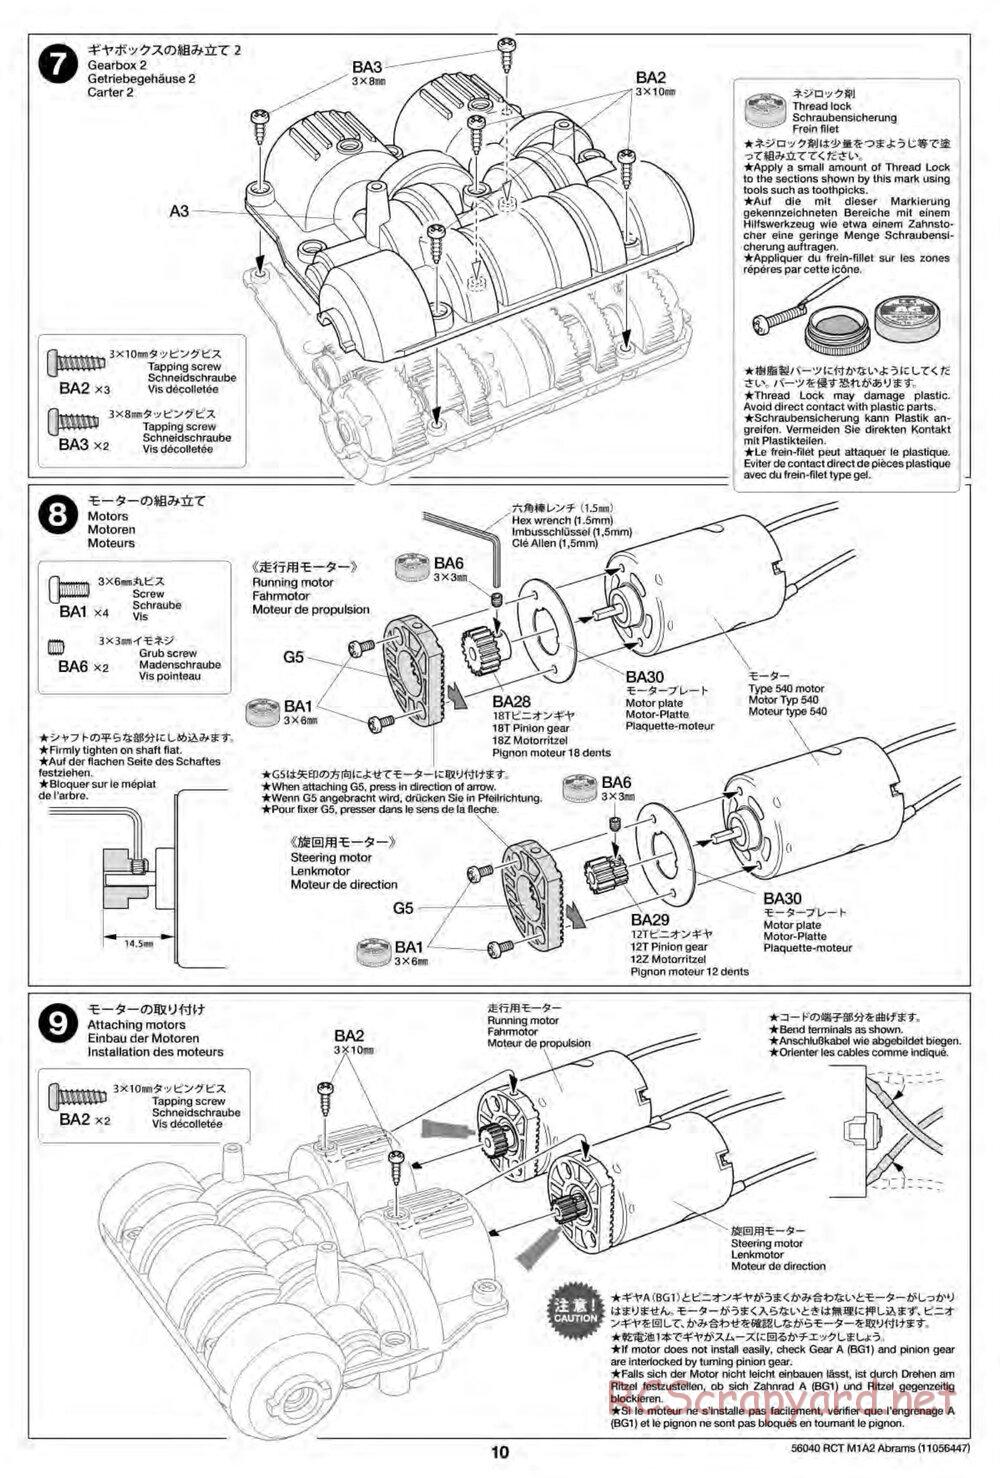 Tamiya - U.S. Main Battle Tank M1A2 Abrams - 1/16 Scale Chassis - Manual - Page 10